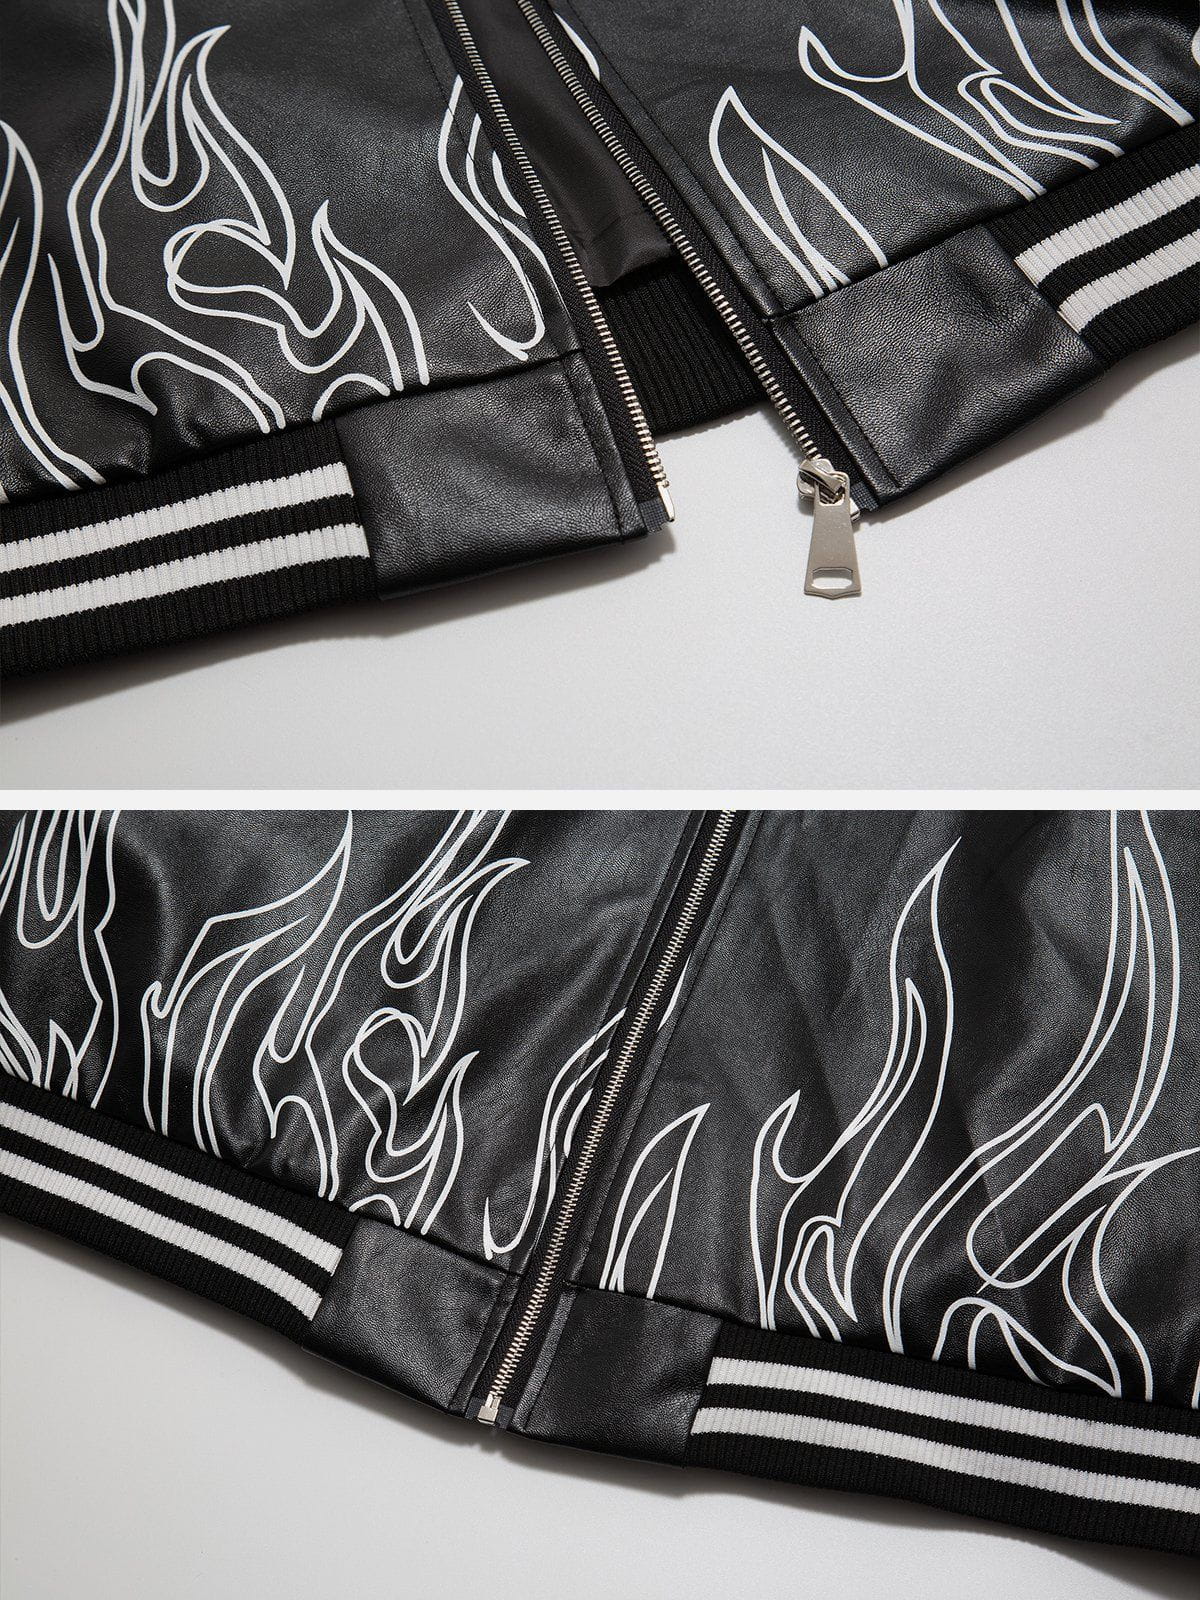 Majesda® - Flame Letter Print Jacket outfit ideas, streetwear fashion - majesda.com